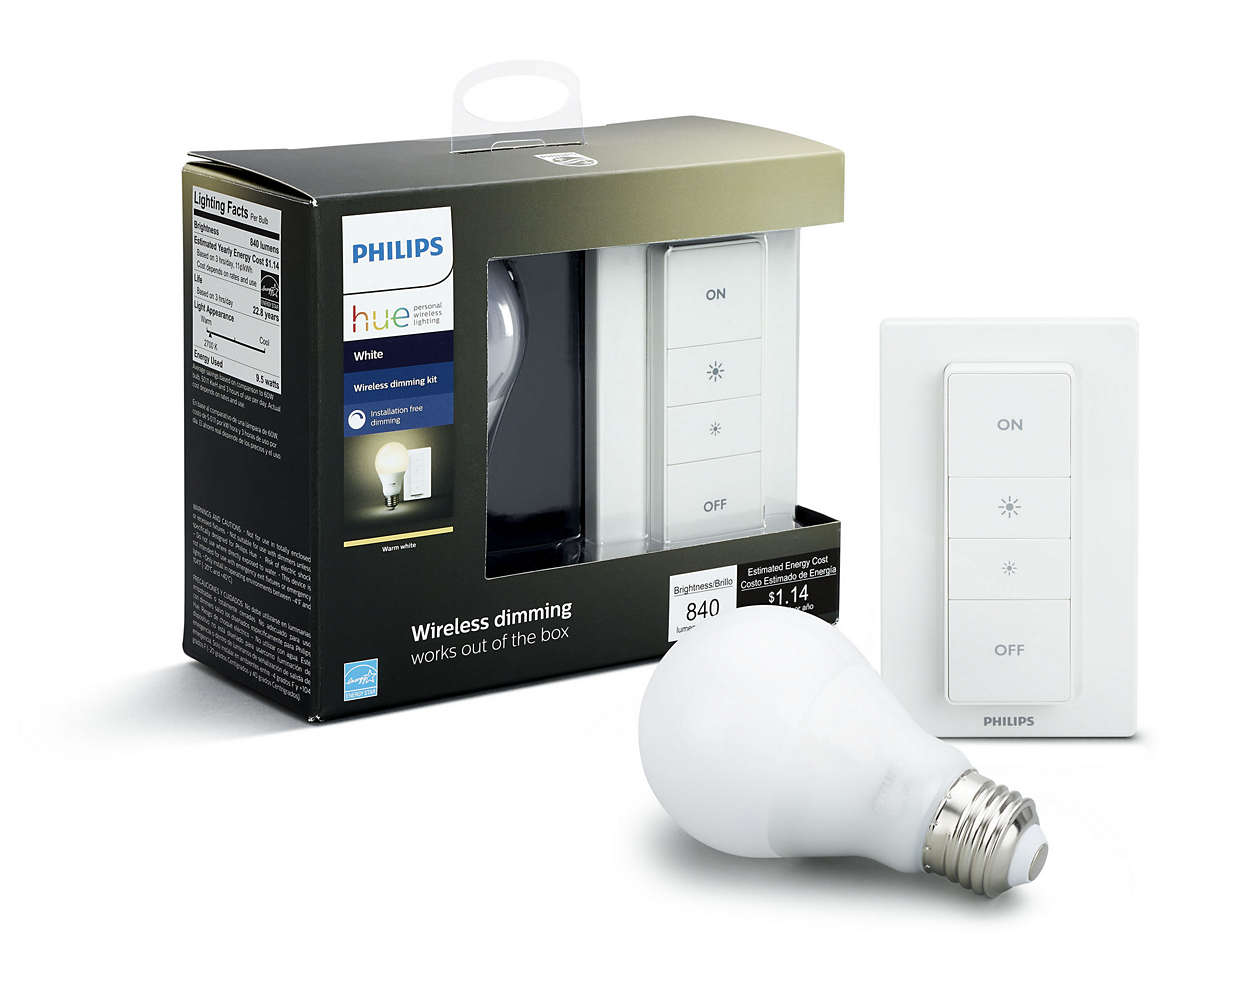 Philips Hue White A19 Smart Light Dimming Kit, 60W LED, 1-Pack - image 1 of 2